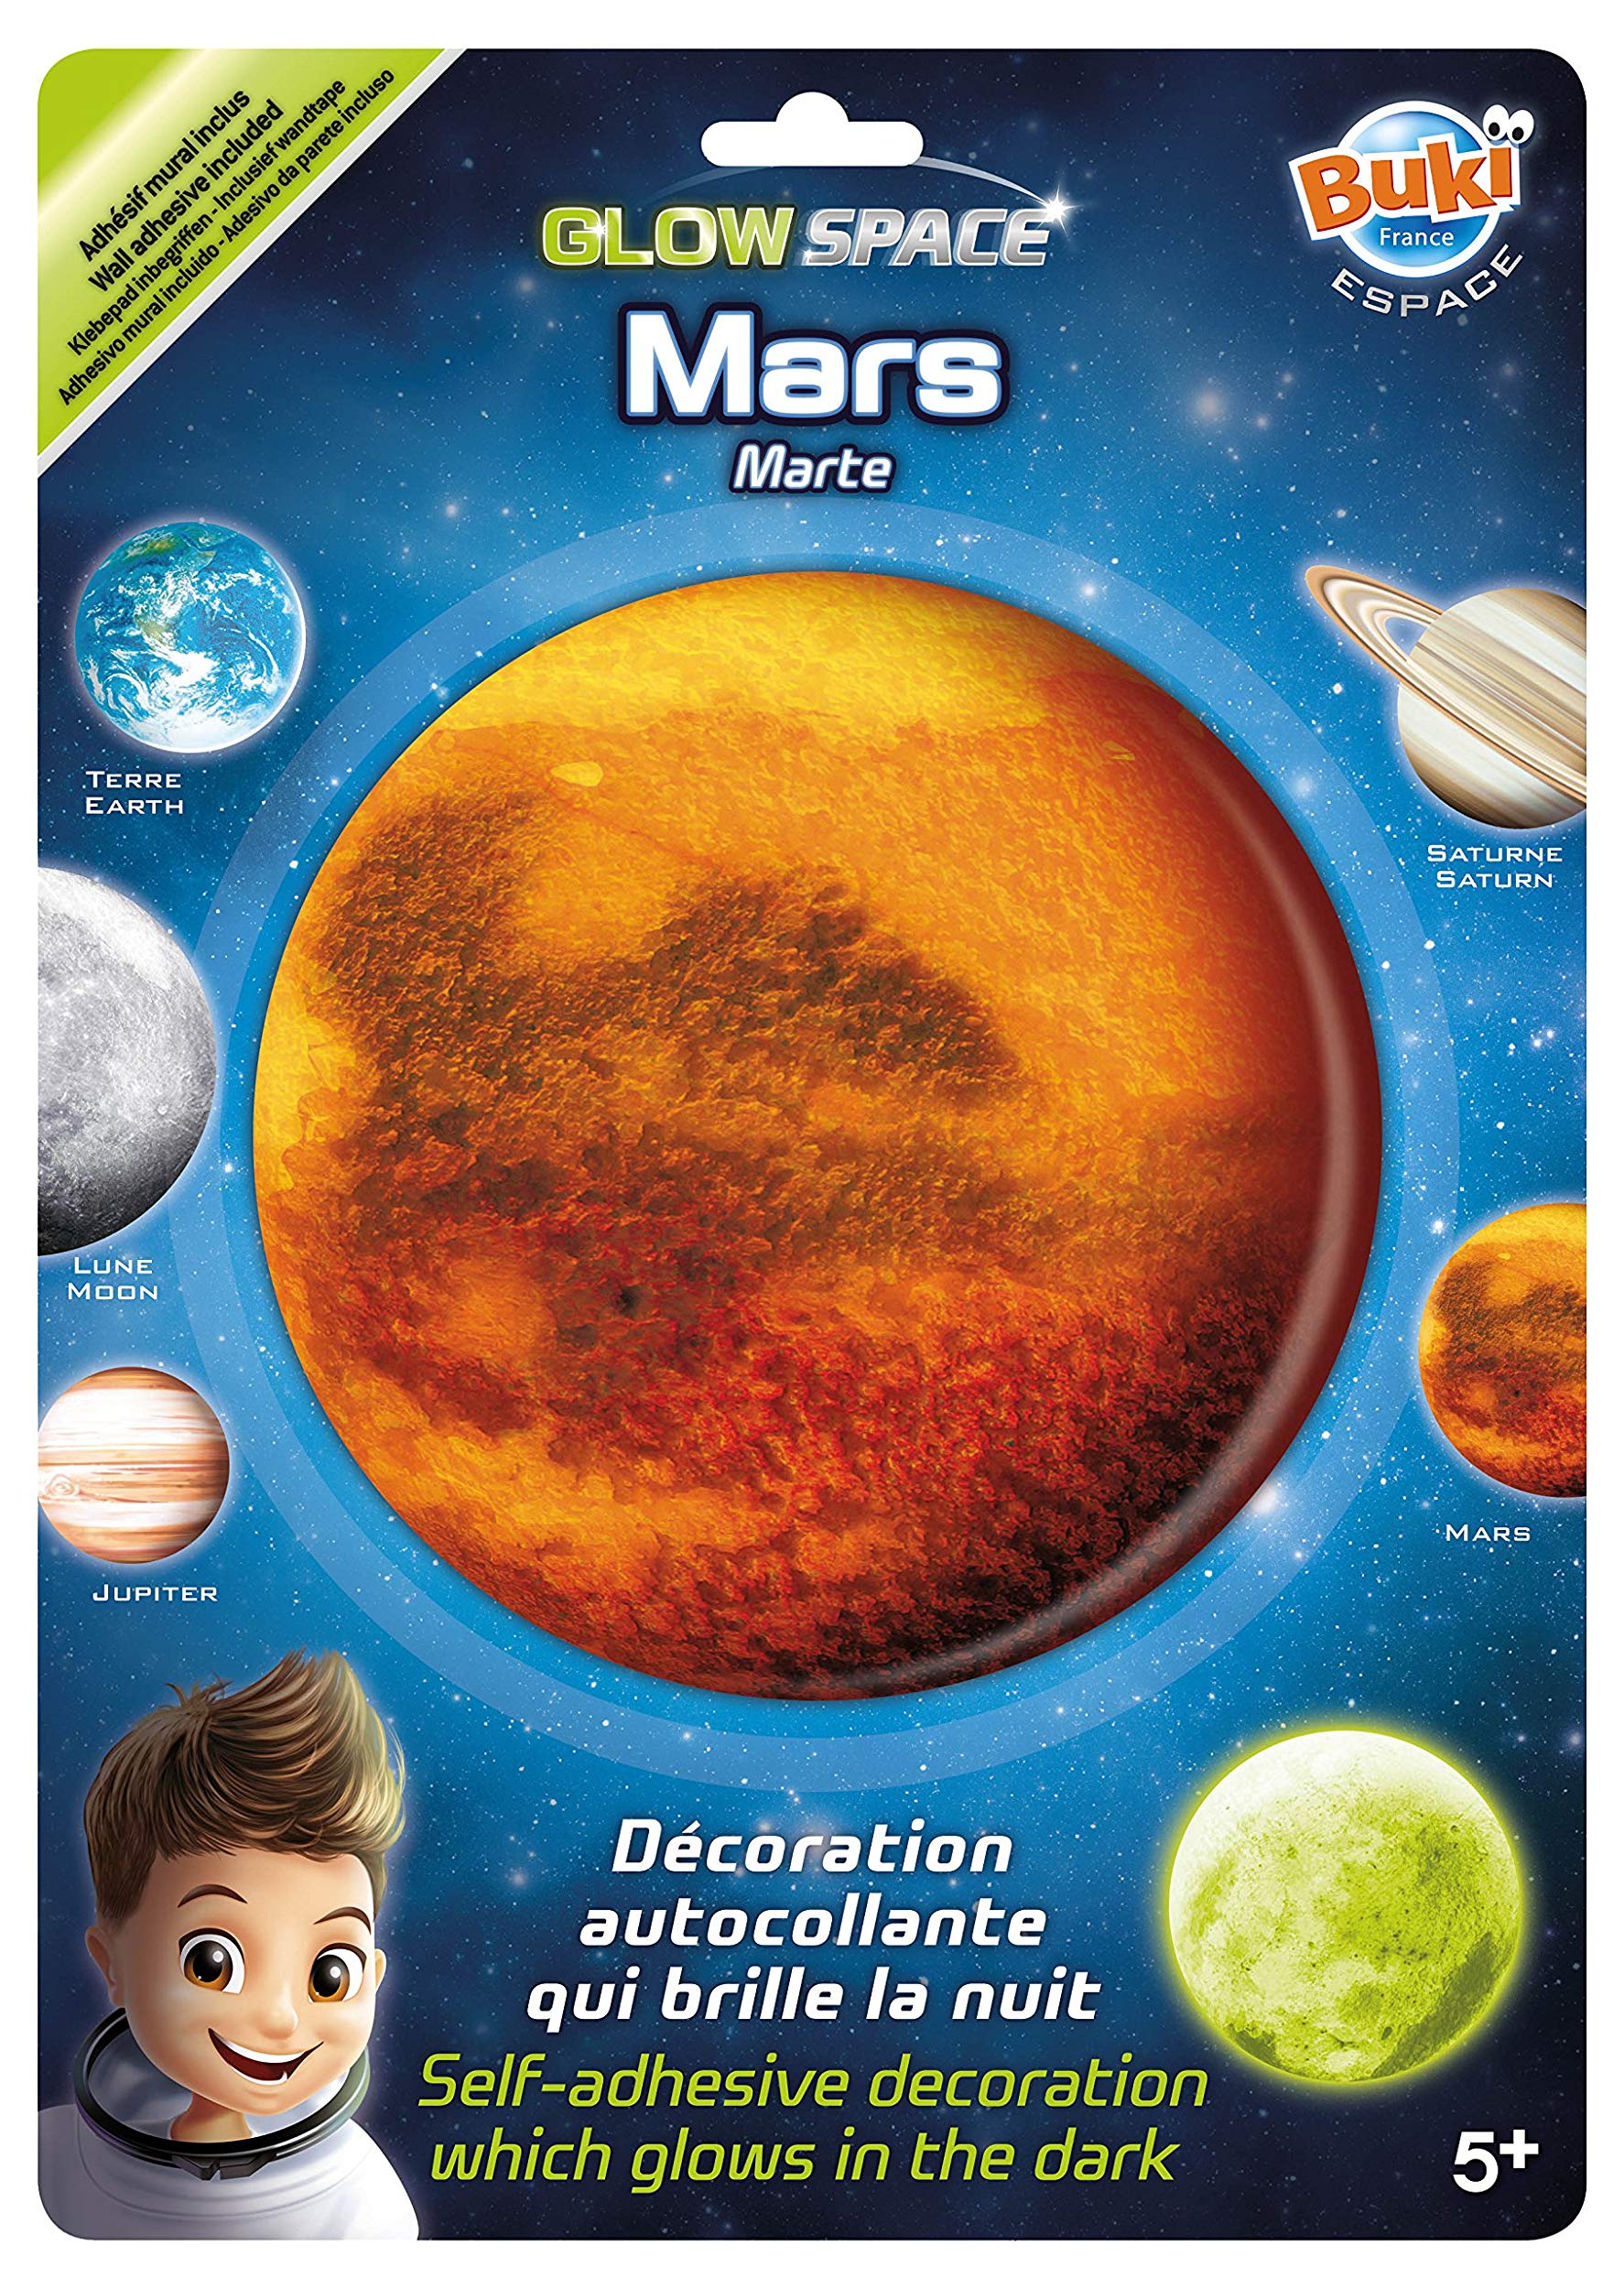 Buki France Df Phosphorus Cent Planet Mars